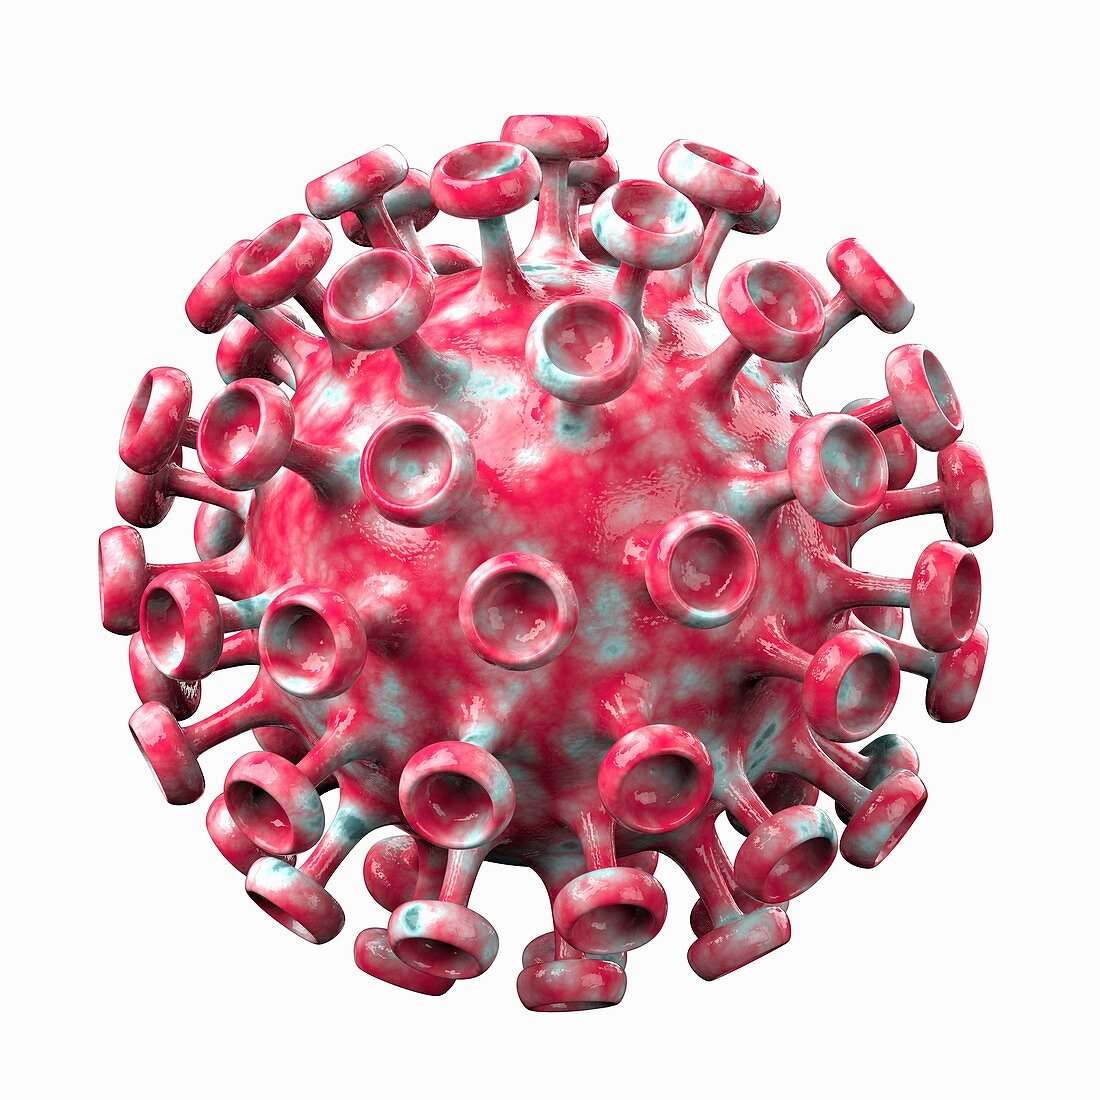 Virus capsid, conceptual illustration